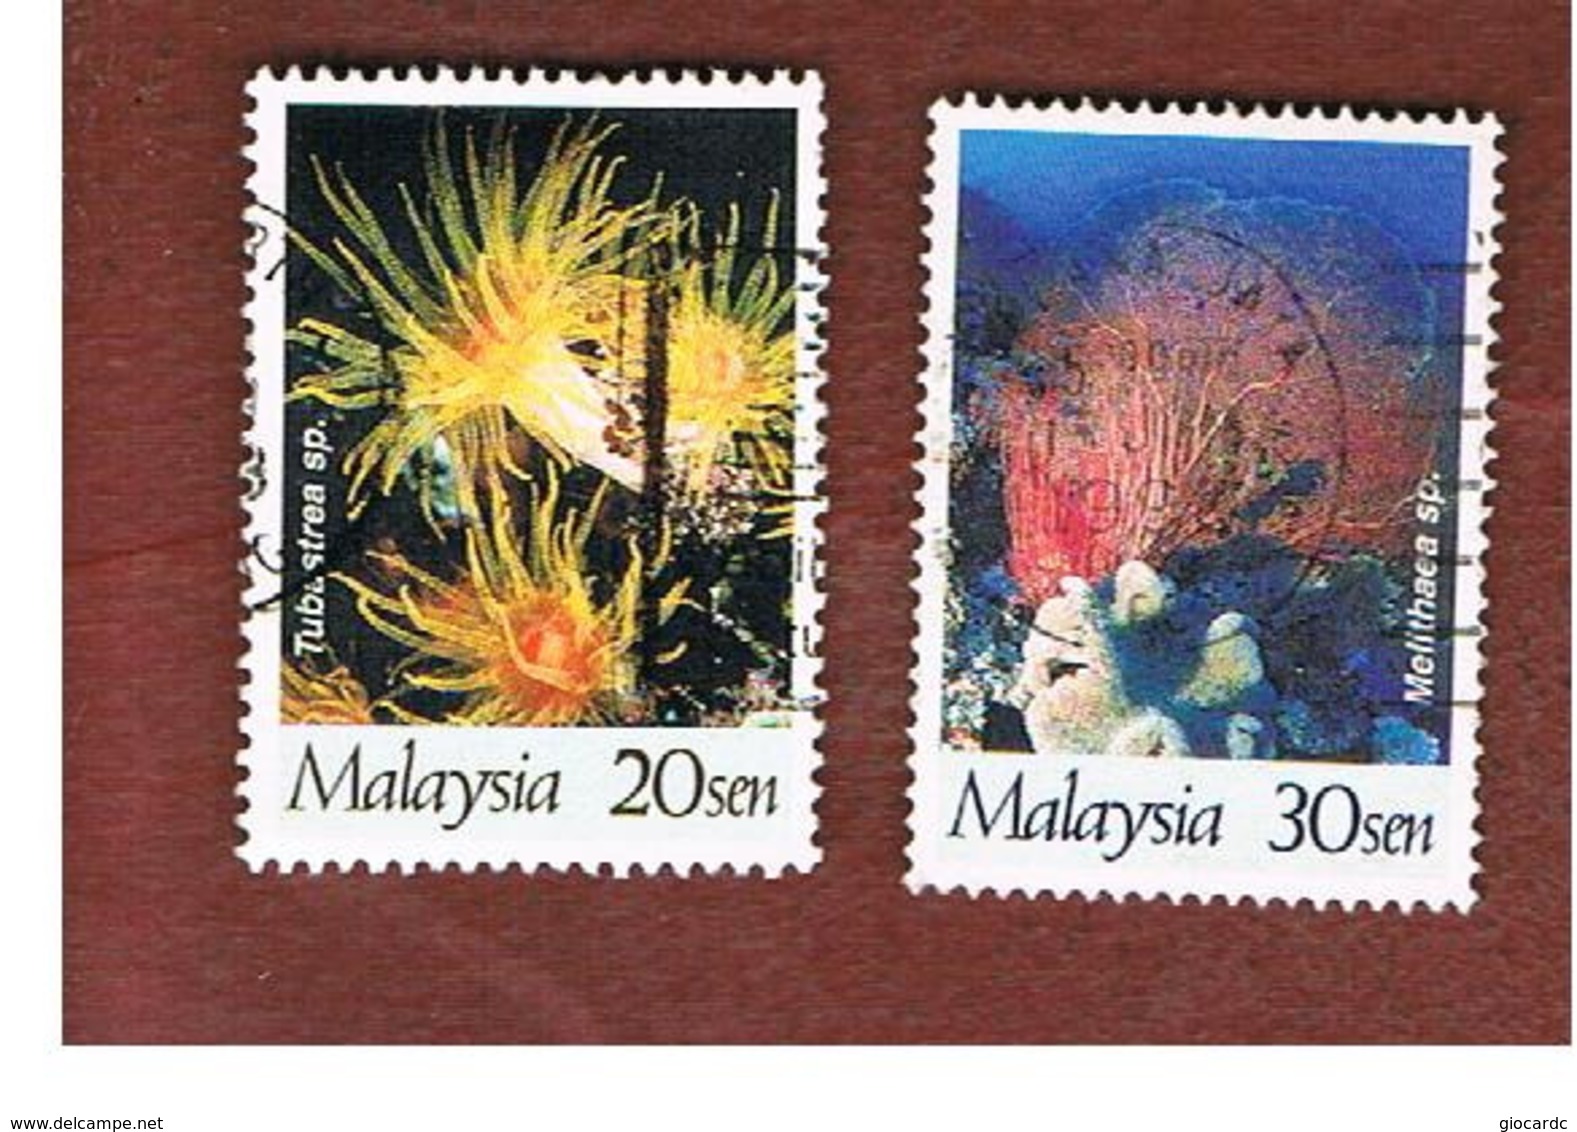 MALESIA (MALAYSIA)  -  SG 658.659  -   1997  CORAL REEFS   -  USED ° - Malaysia (1964-...)